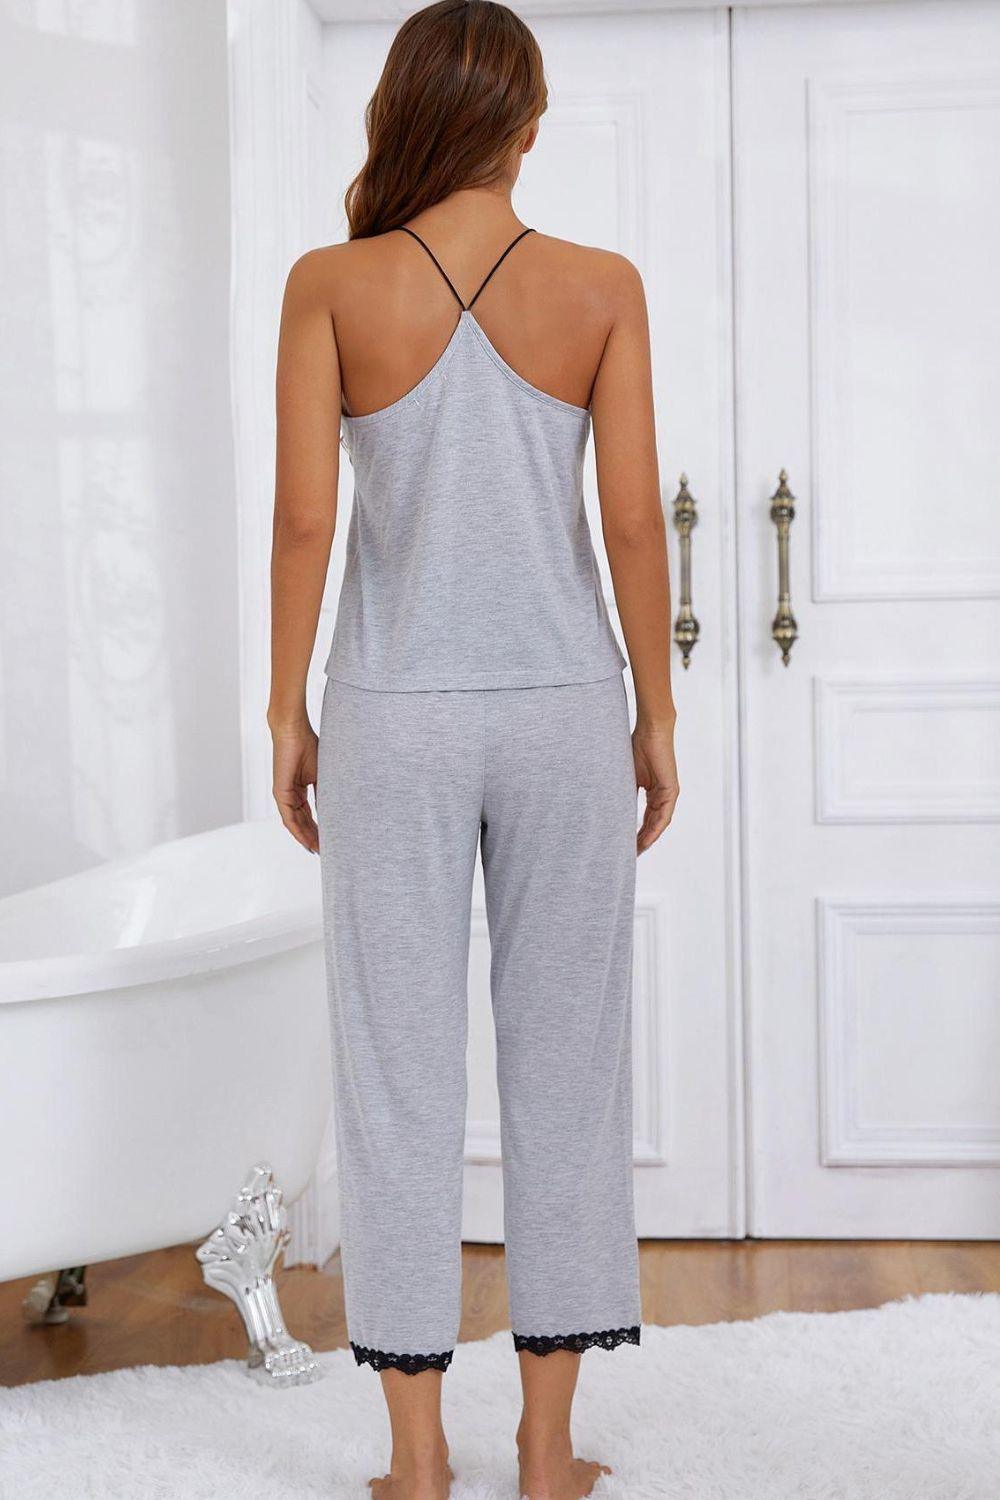 Halter Neck Cami and Lace Trim Pajama Set - Lab Fashion, Home & Health